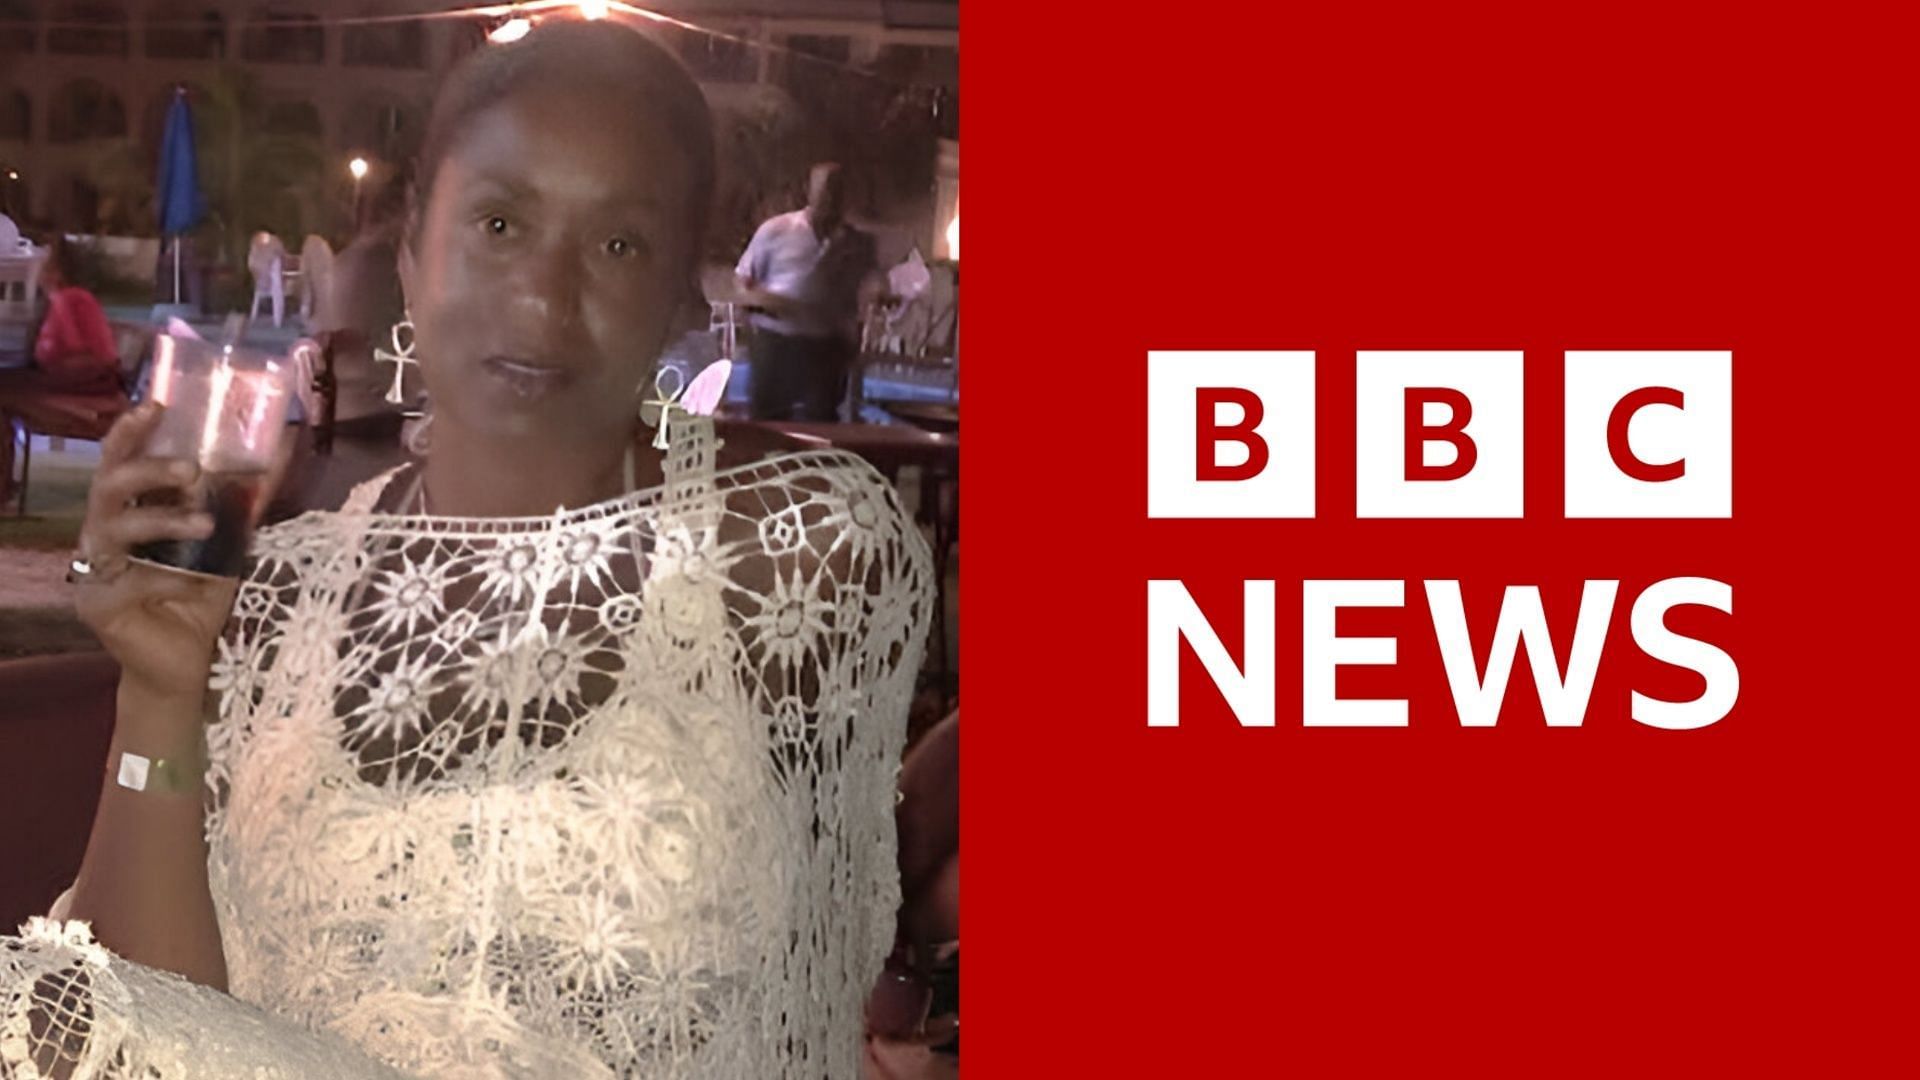 BBC employee Dawn Queva sparks backlash online for antisemitic posts. (Image via Facebook/Dawn Las Quevas-Allen, BBC News